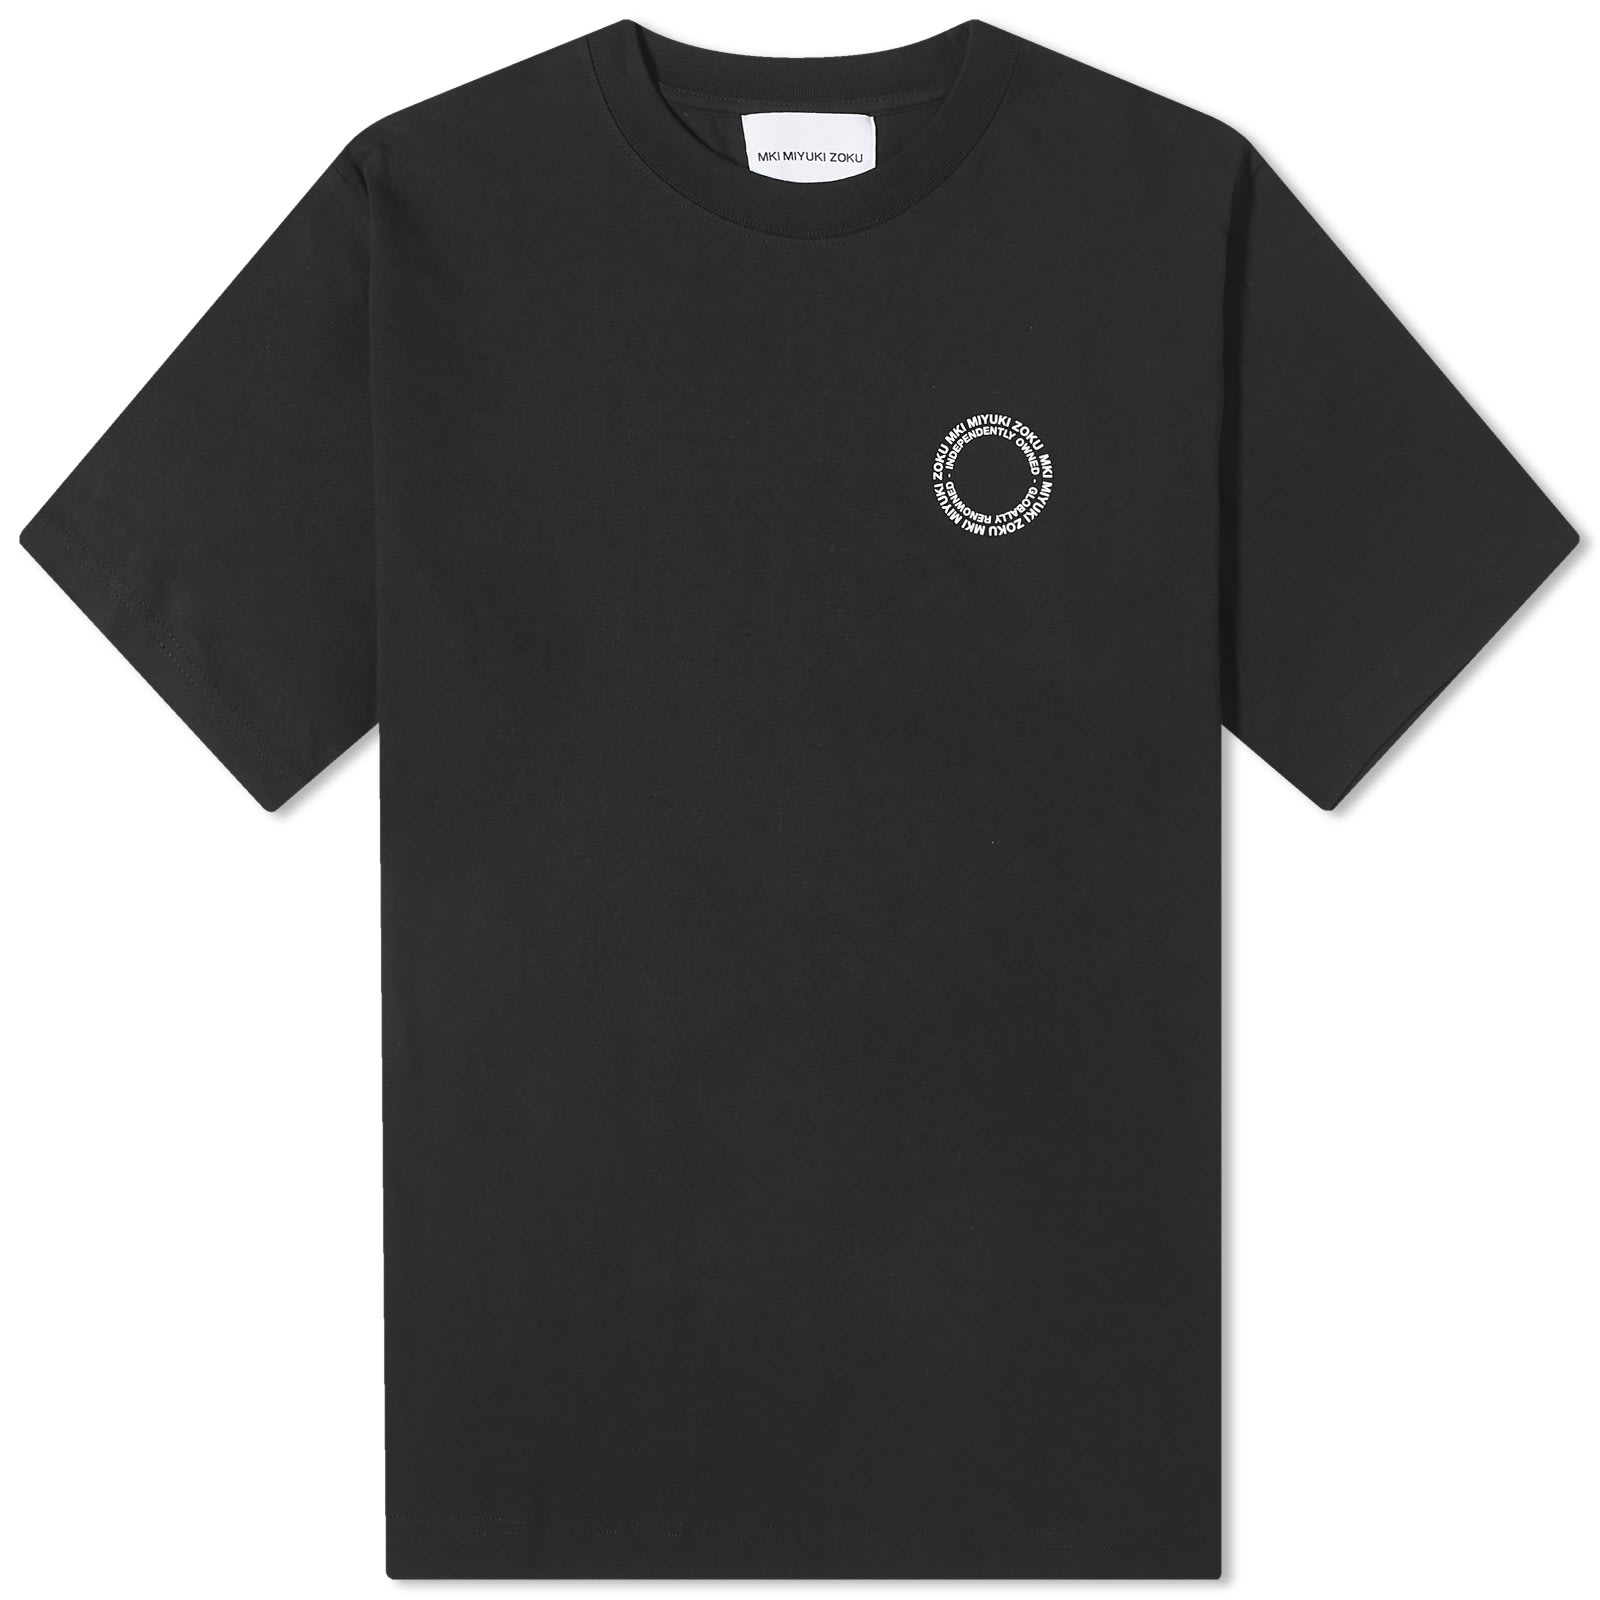 Футболка Mki Circle, черный футболка mki circle черный